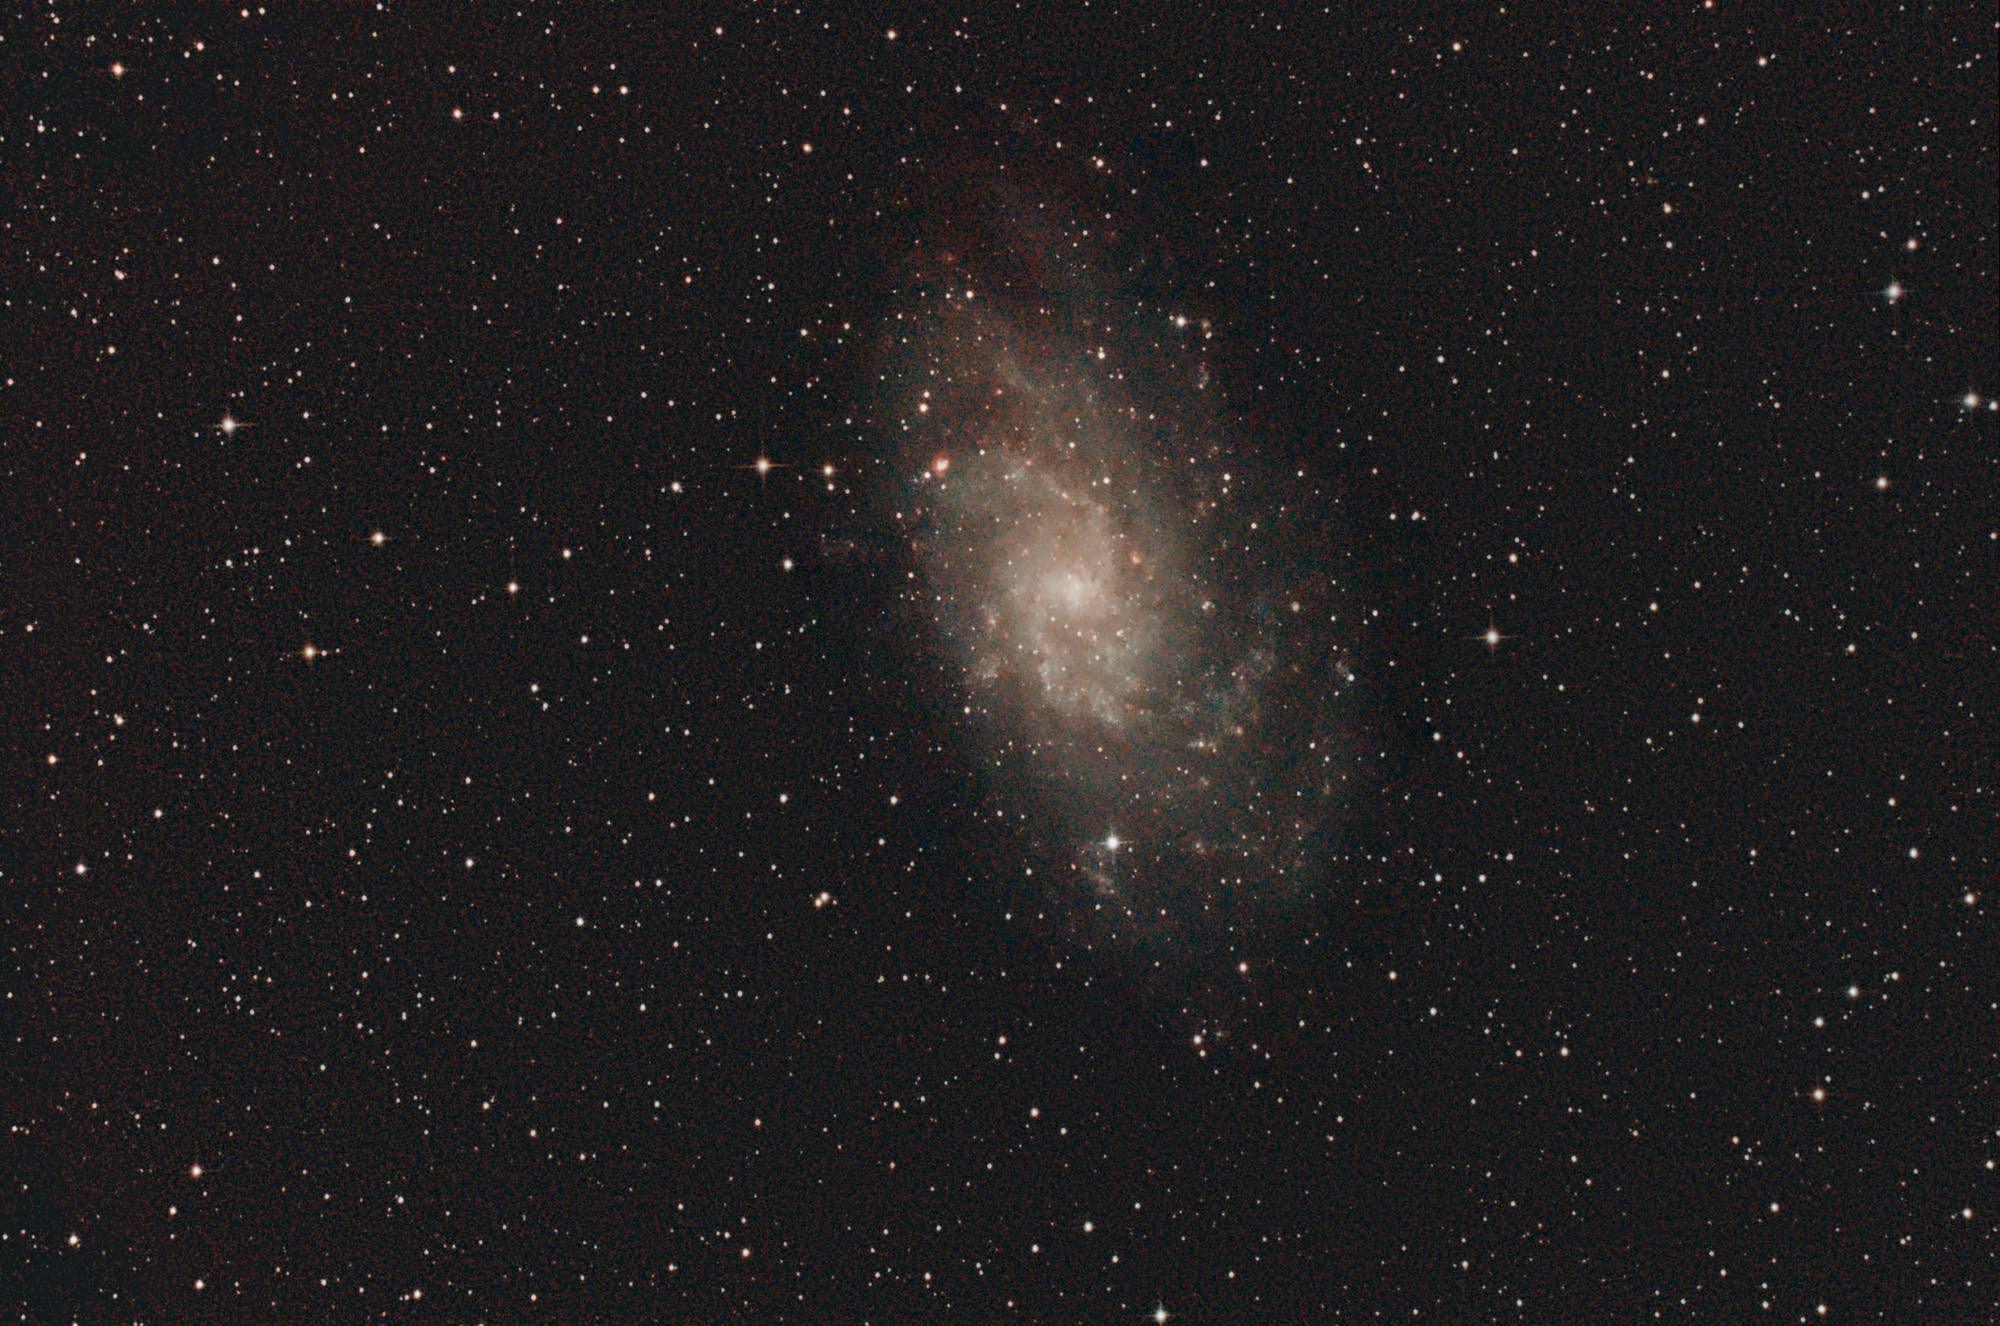 Triangulumgalaxie Messier 33 im Sternbild Dreieck (Triangulum)